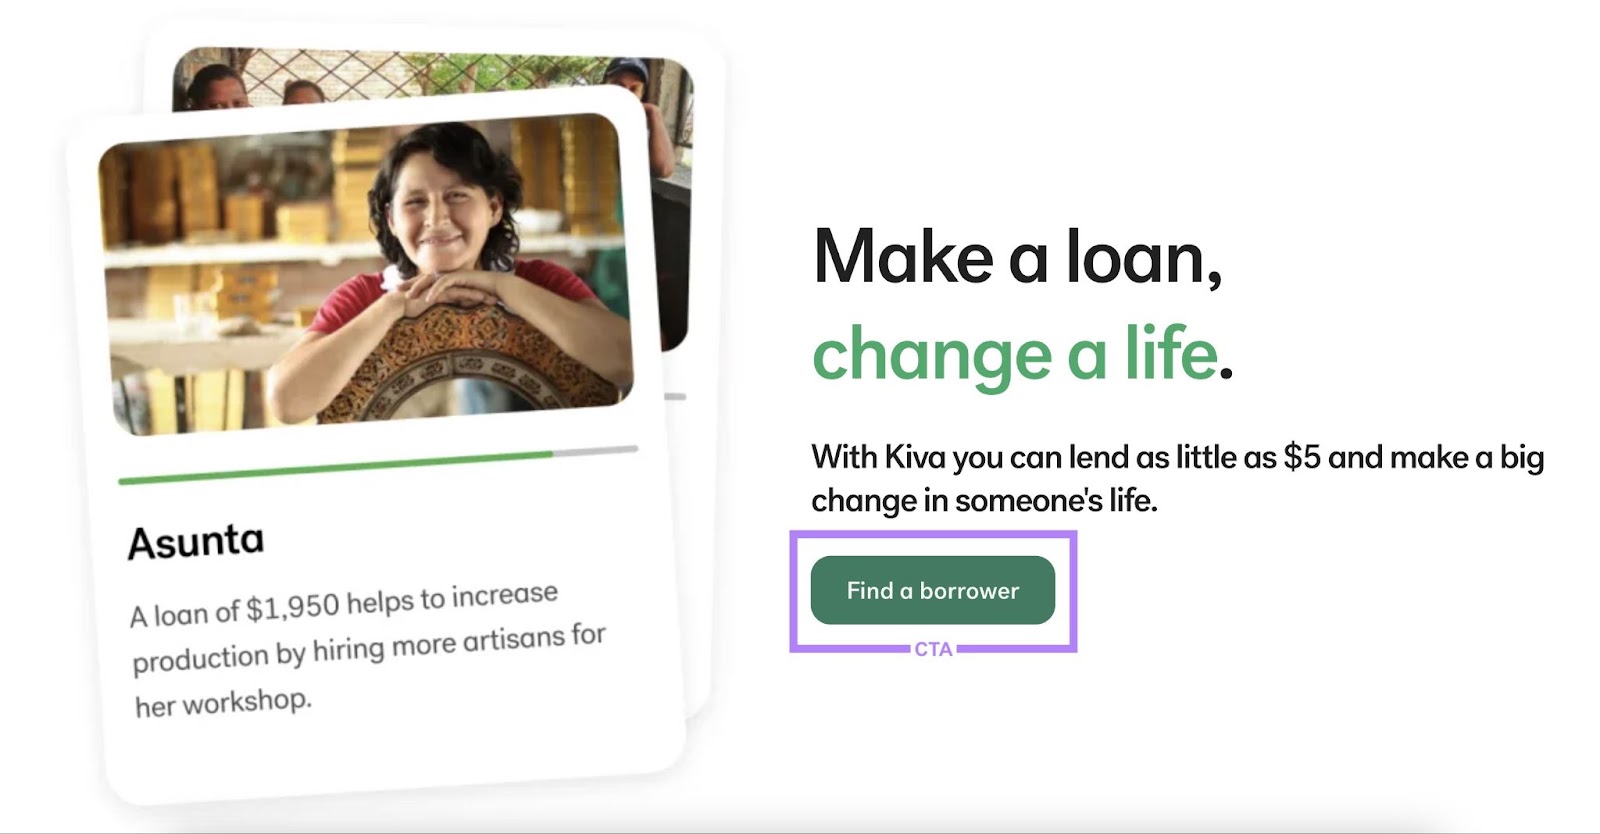 "Find a borrower” CTA on Kiva's website